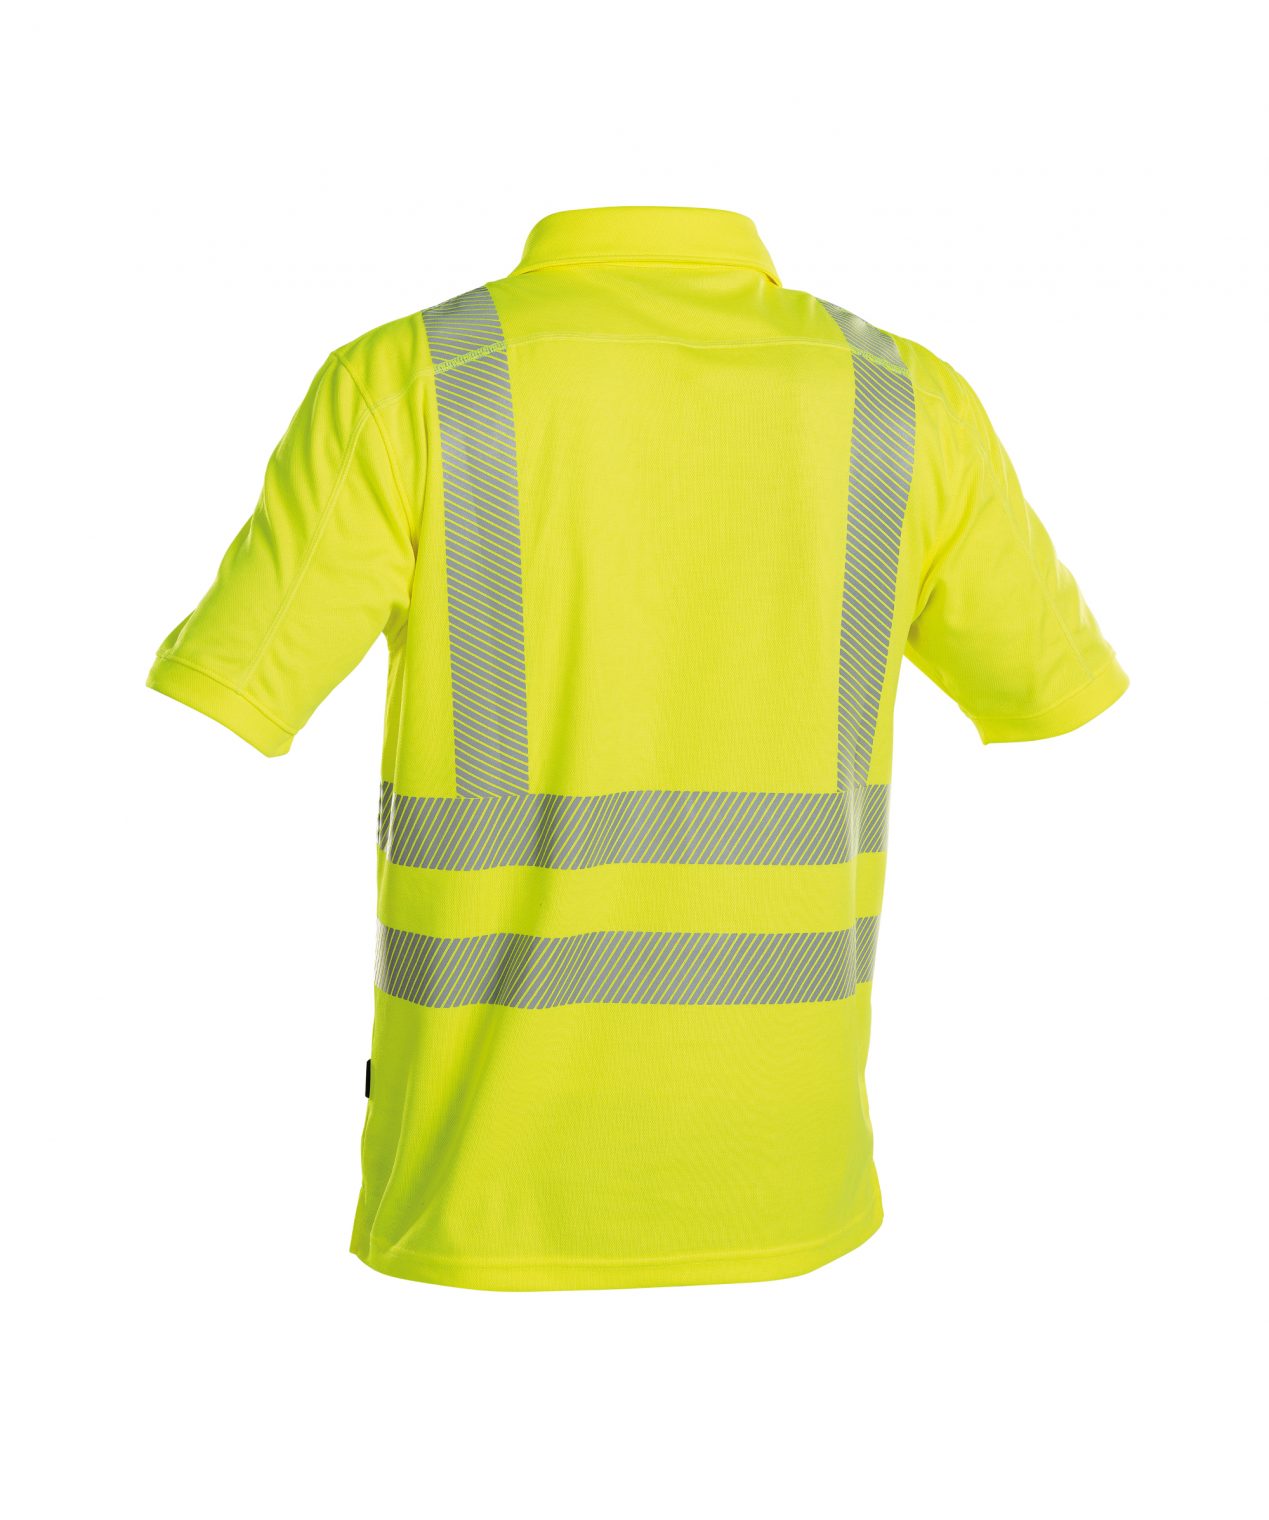 brandon high visibility uv polo shirt fluo yellow back